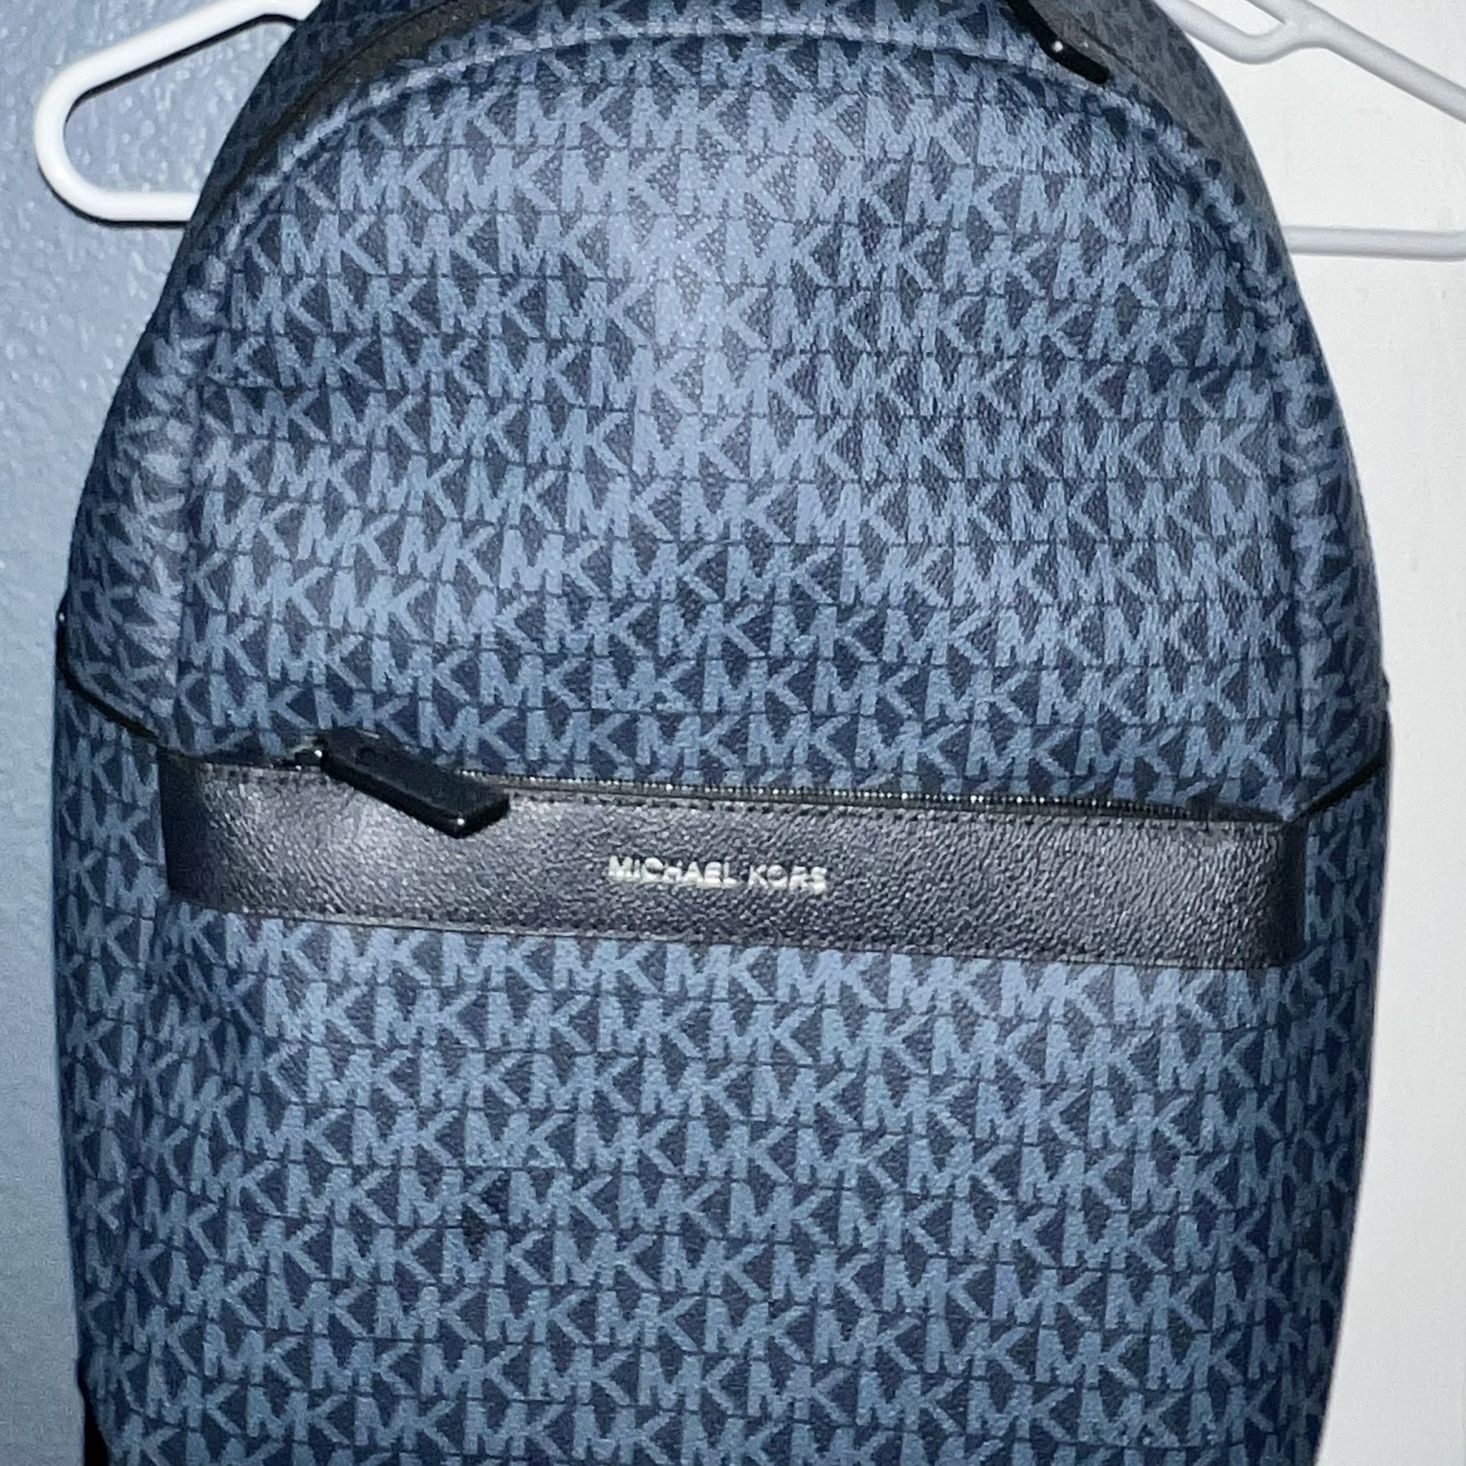 Michael Kors Genuine Men's Greyson Canvas Logo Backpack Admiral Blue $398